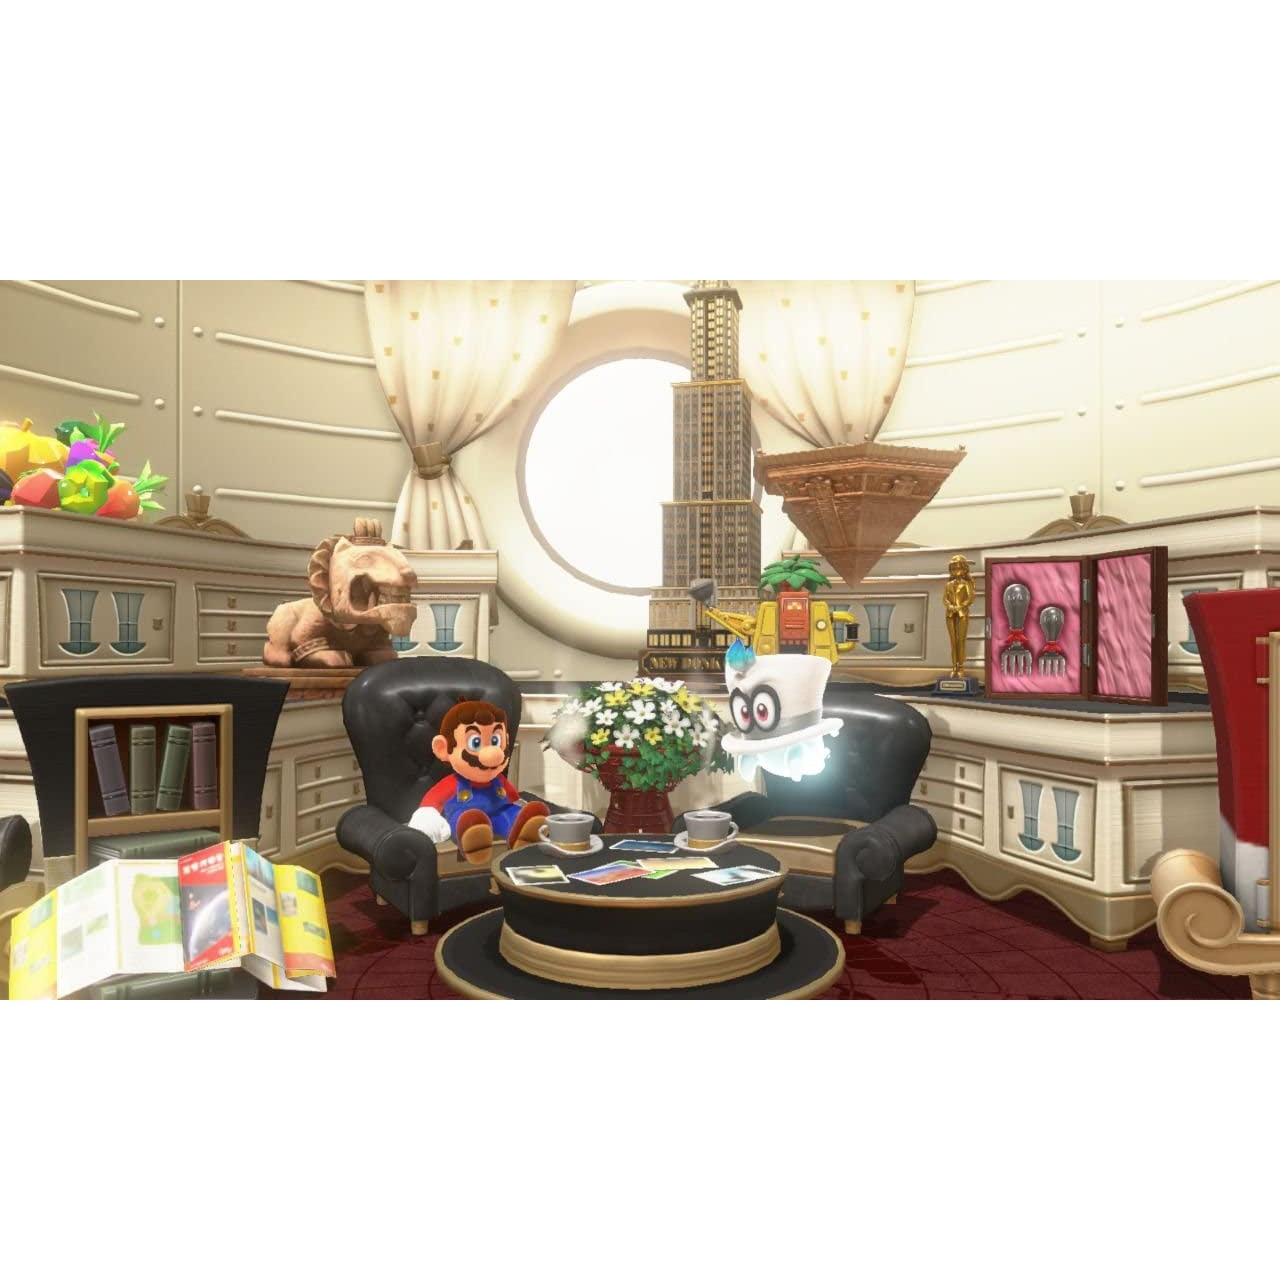 Super Mario Odyssey (Nintendo Switch)